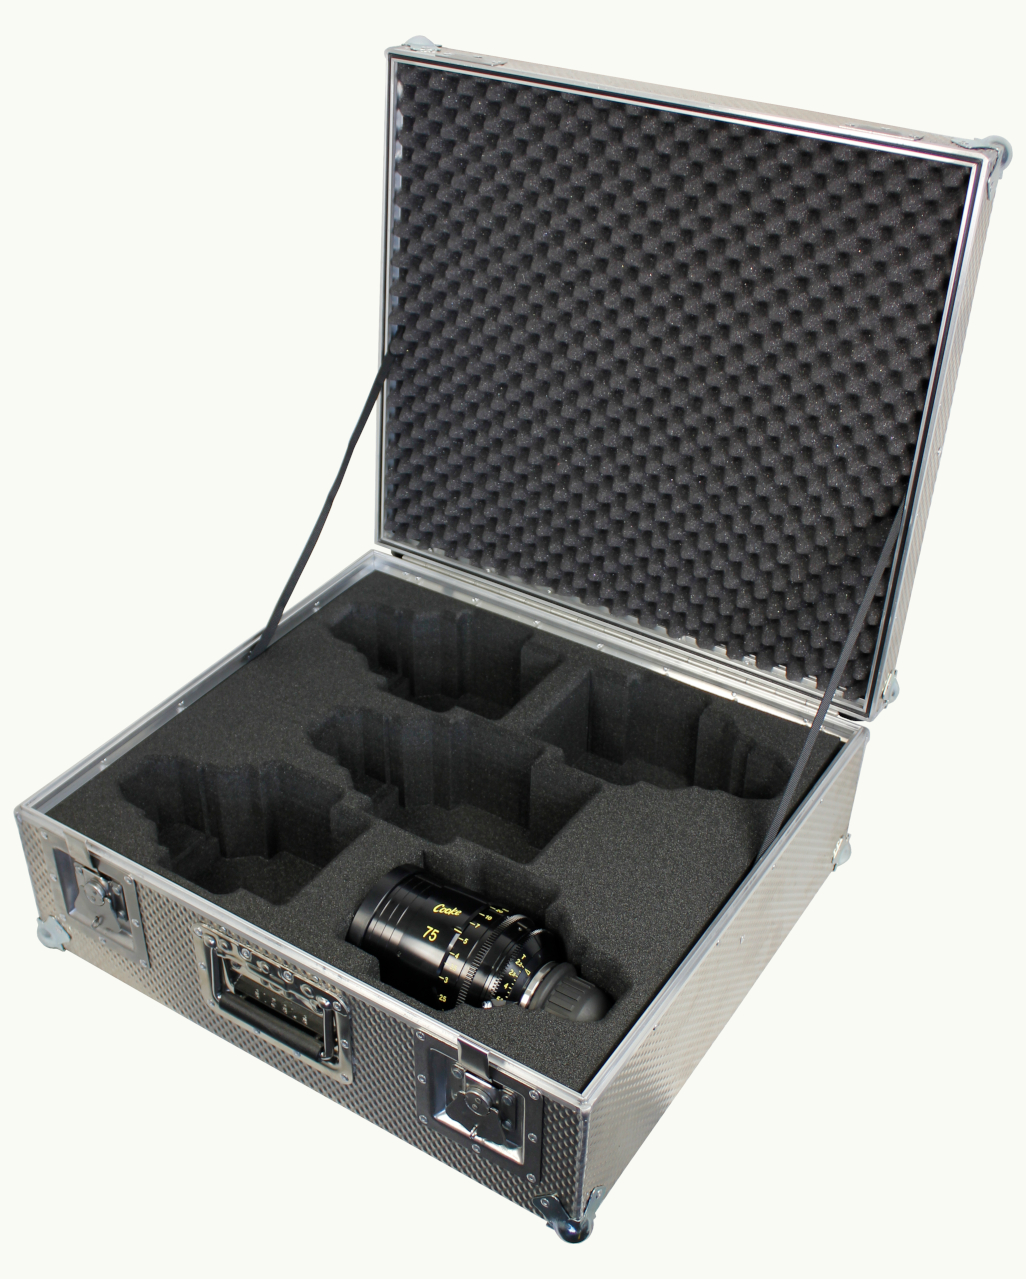 PP Mess geräte Kamera Fotoapparat Film Equipment Koffer Kiste Kasten Box 61317 